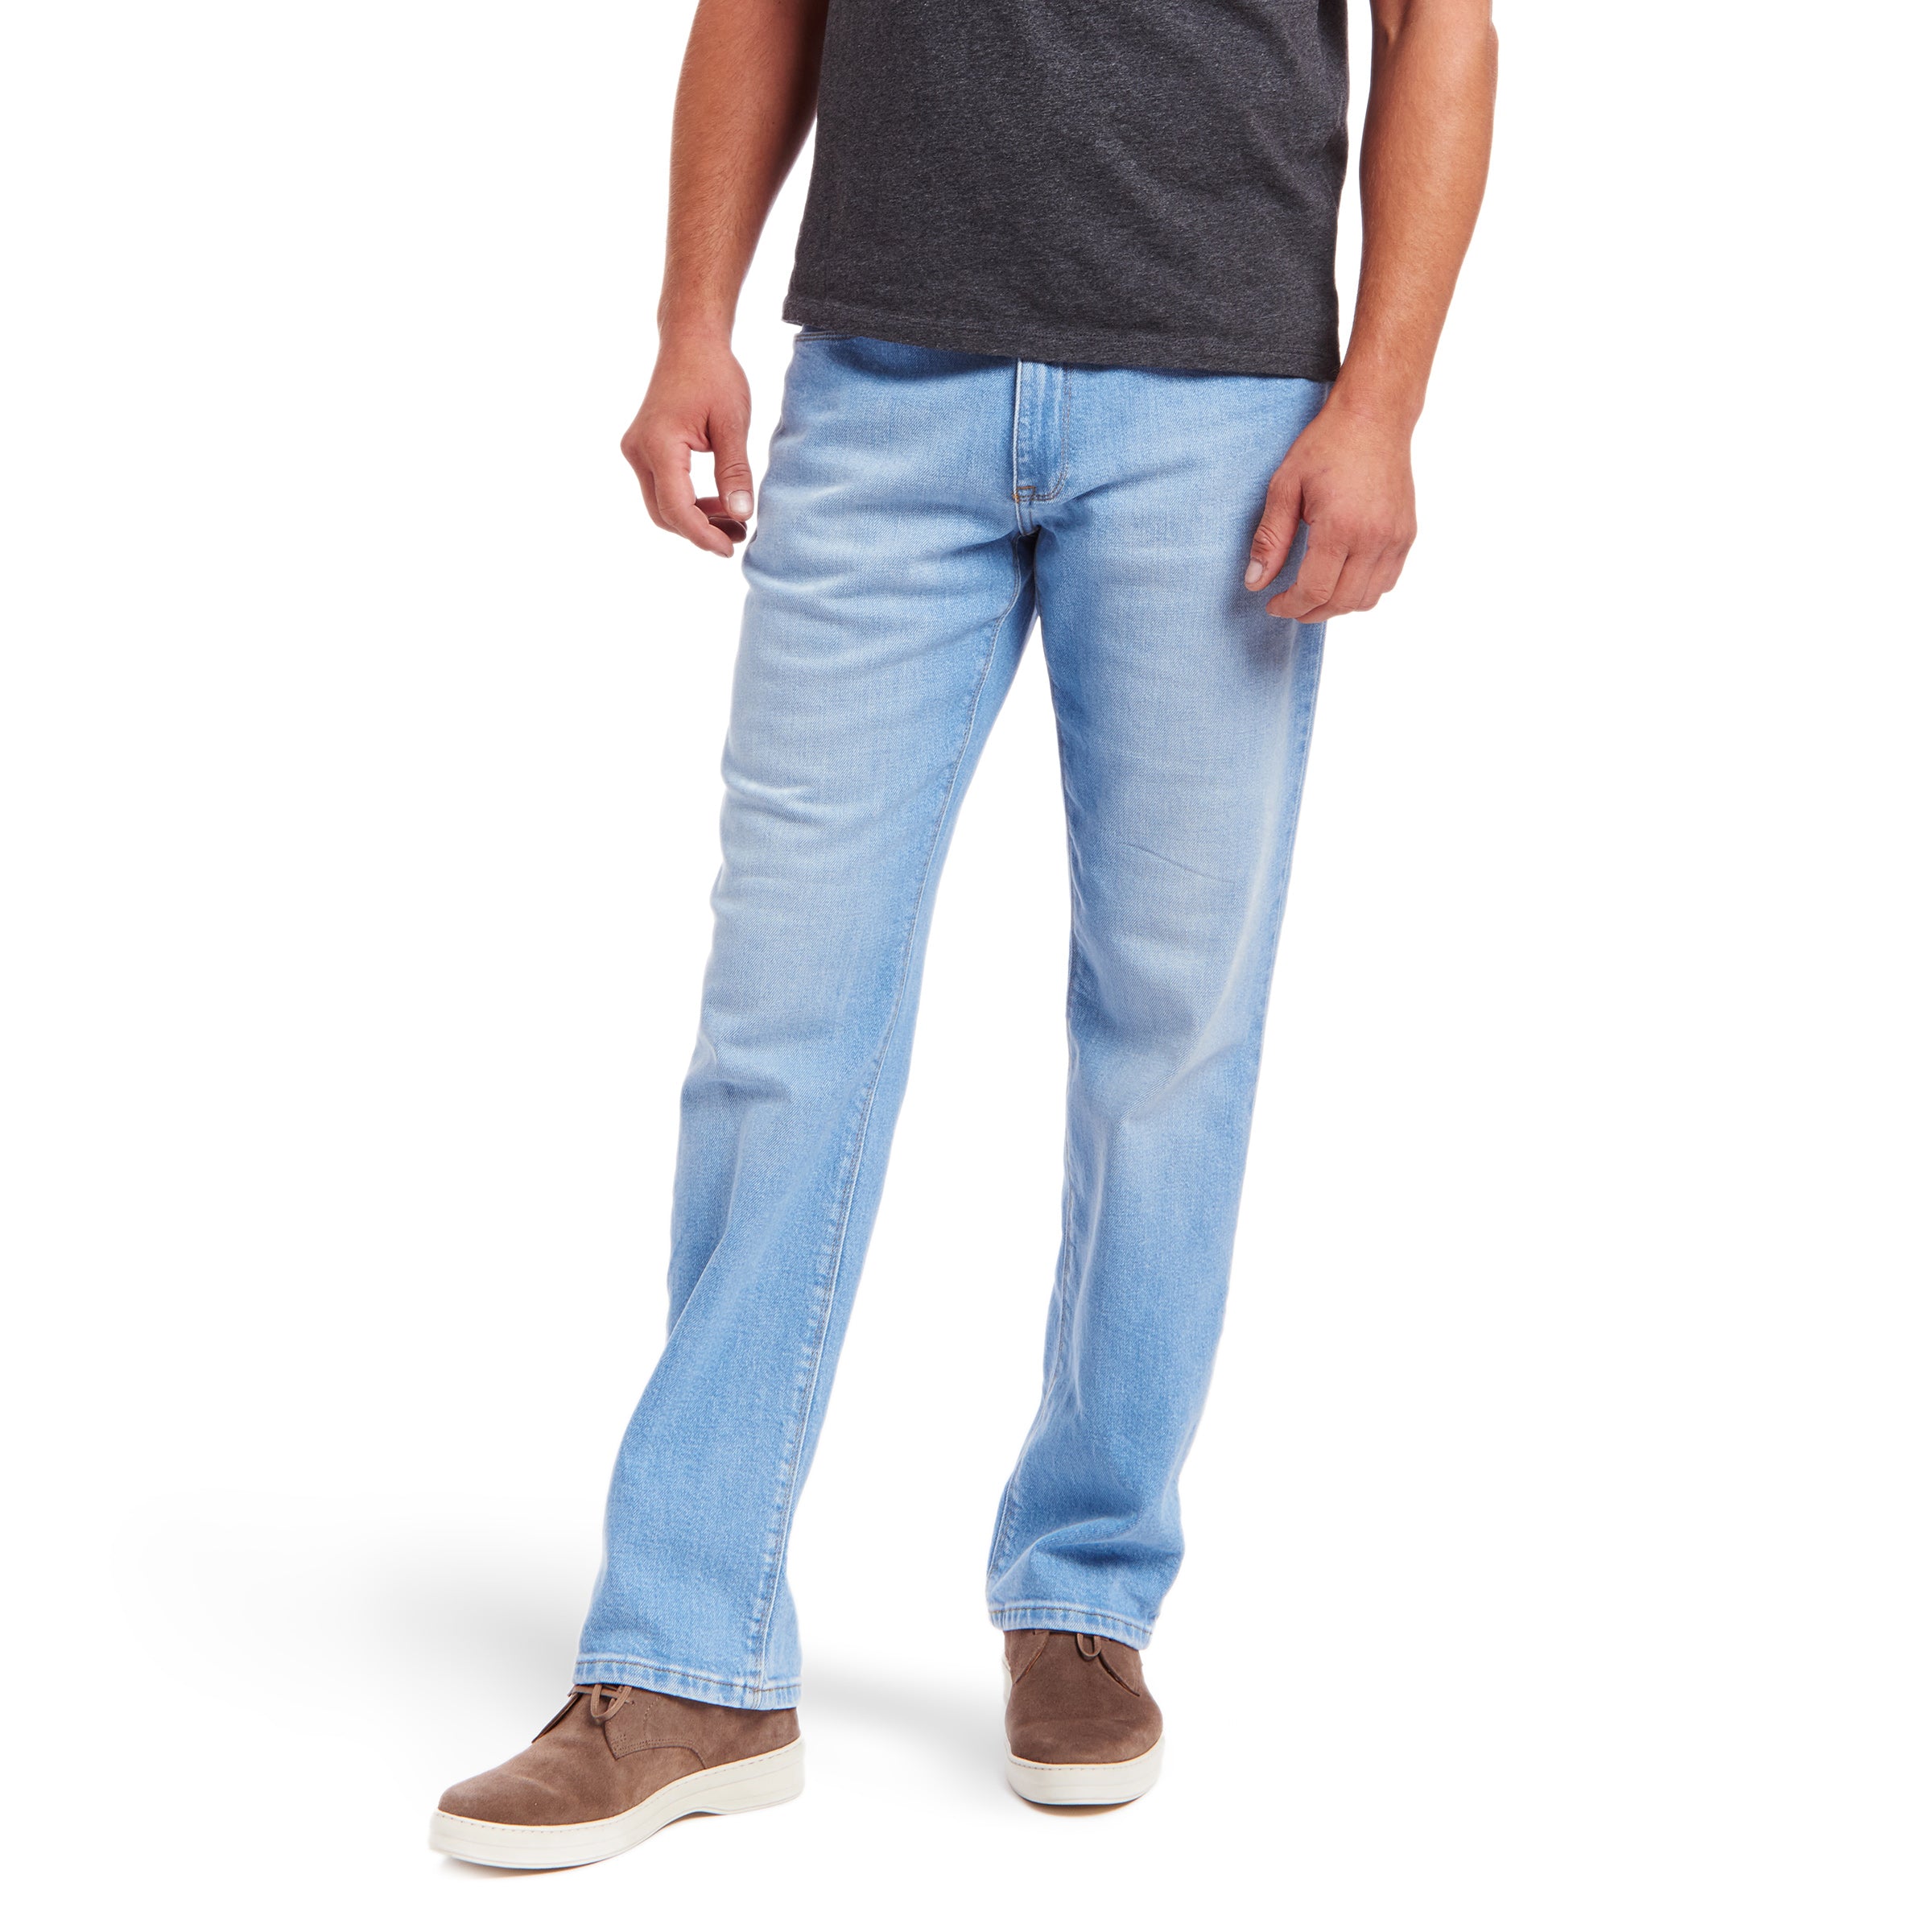 Men wearing Azul claro Straight Hubert Jeans